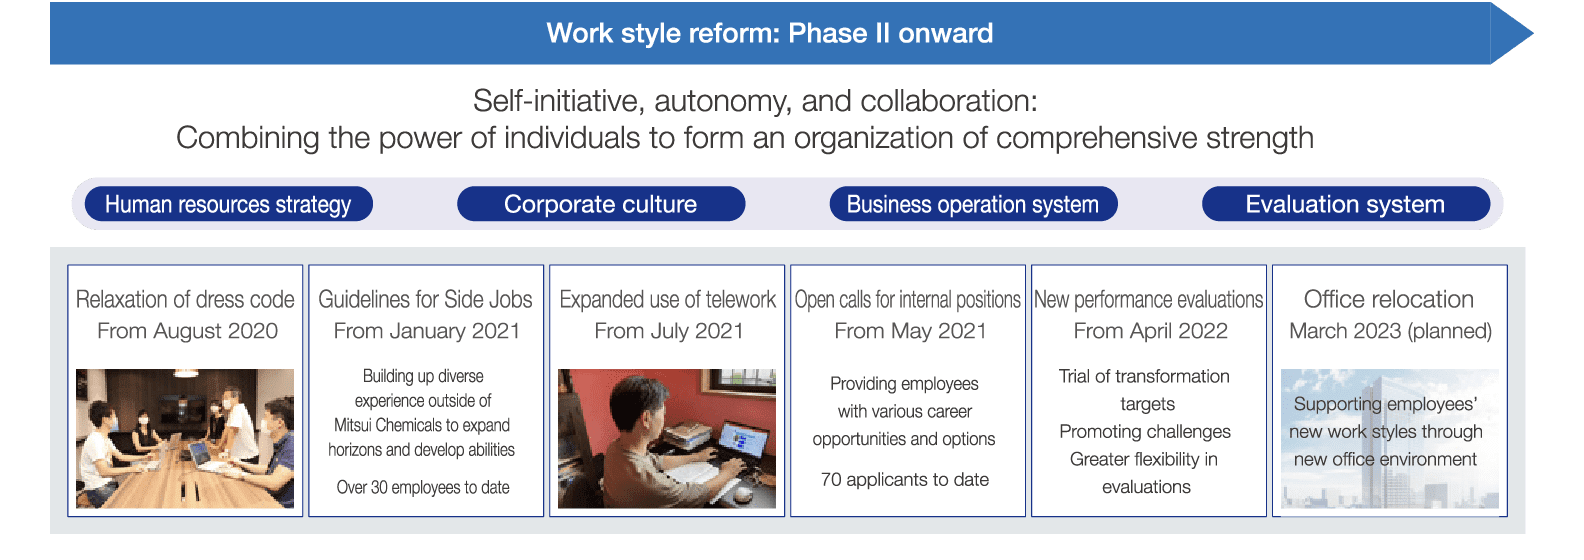 Work style reform: Pase II onward, image